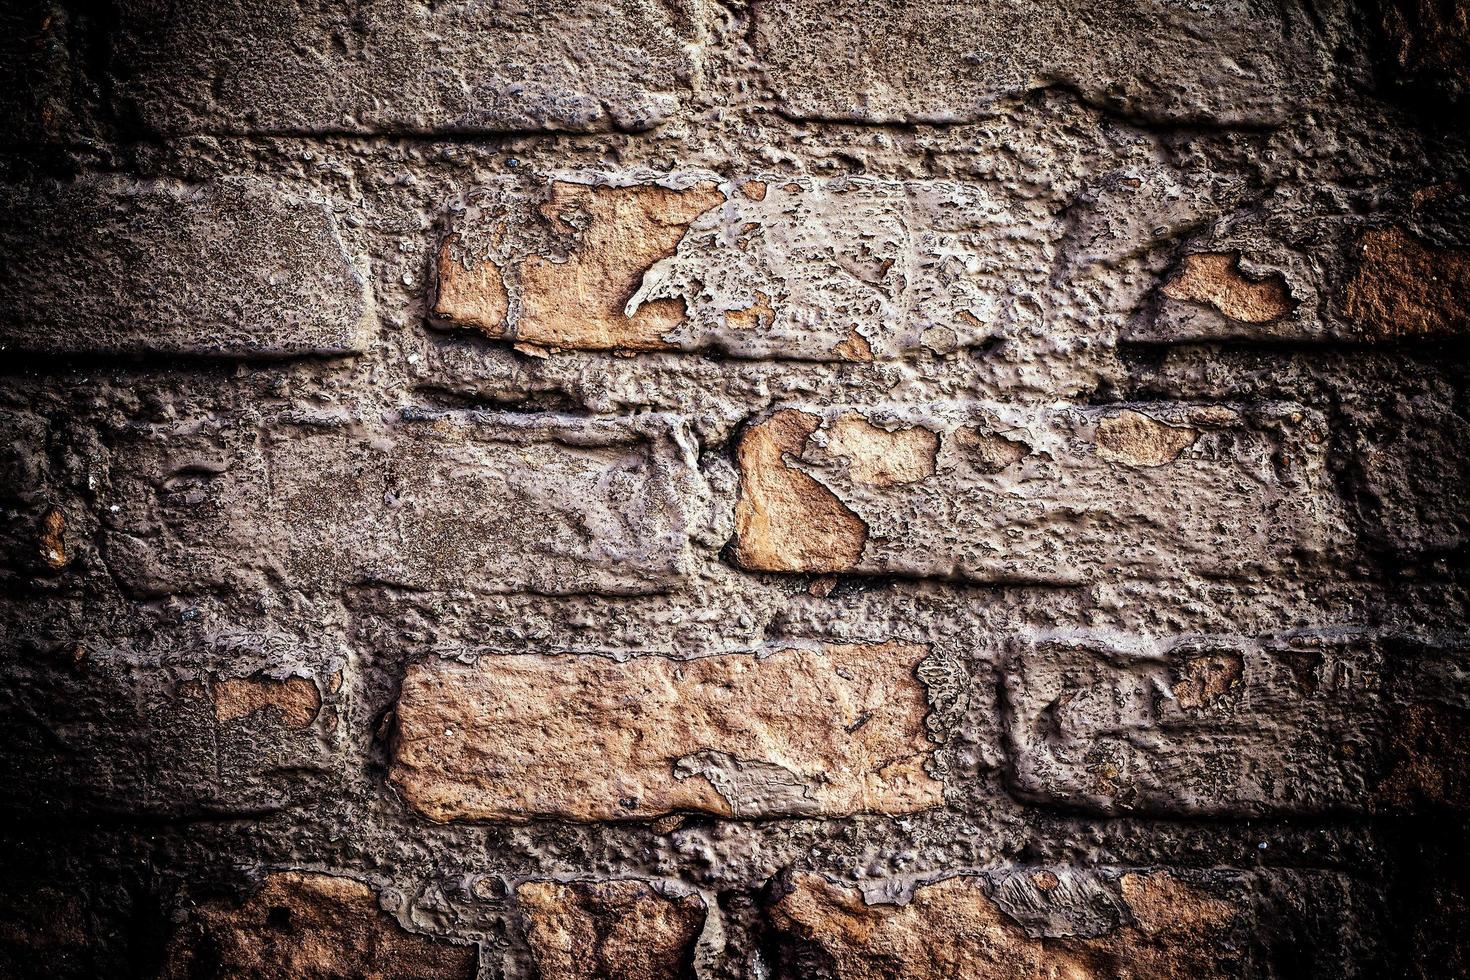 Grunge Stone Brick Wall Background Texture photo